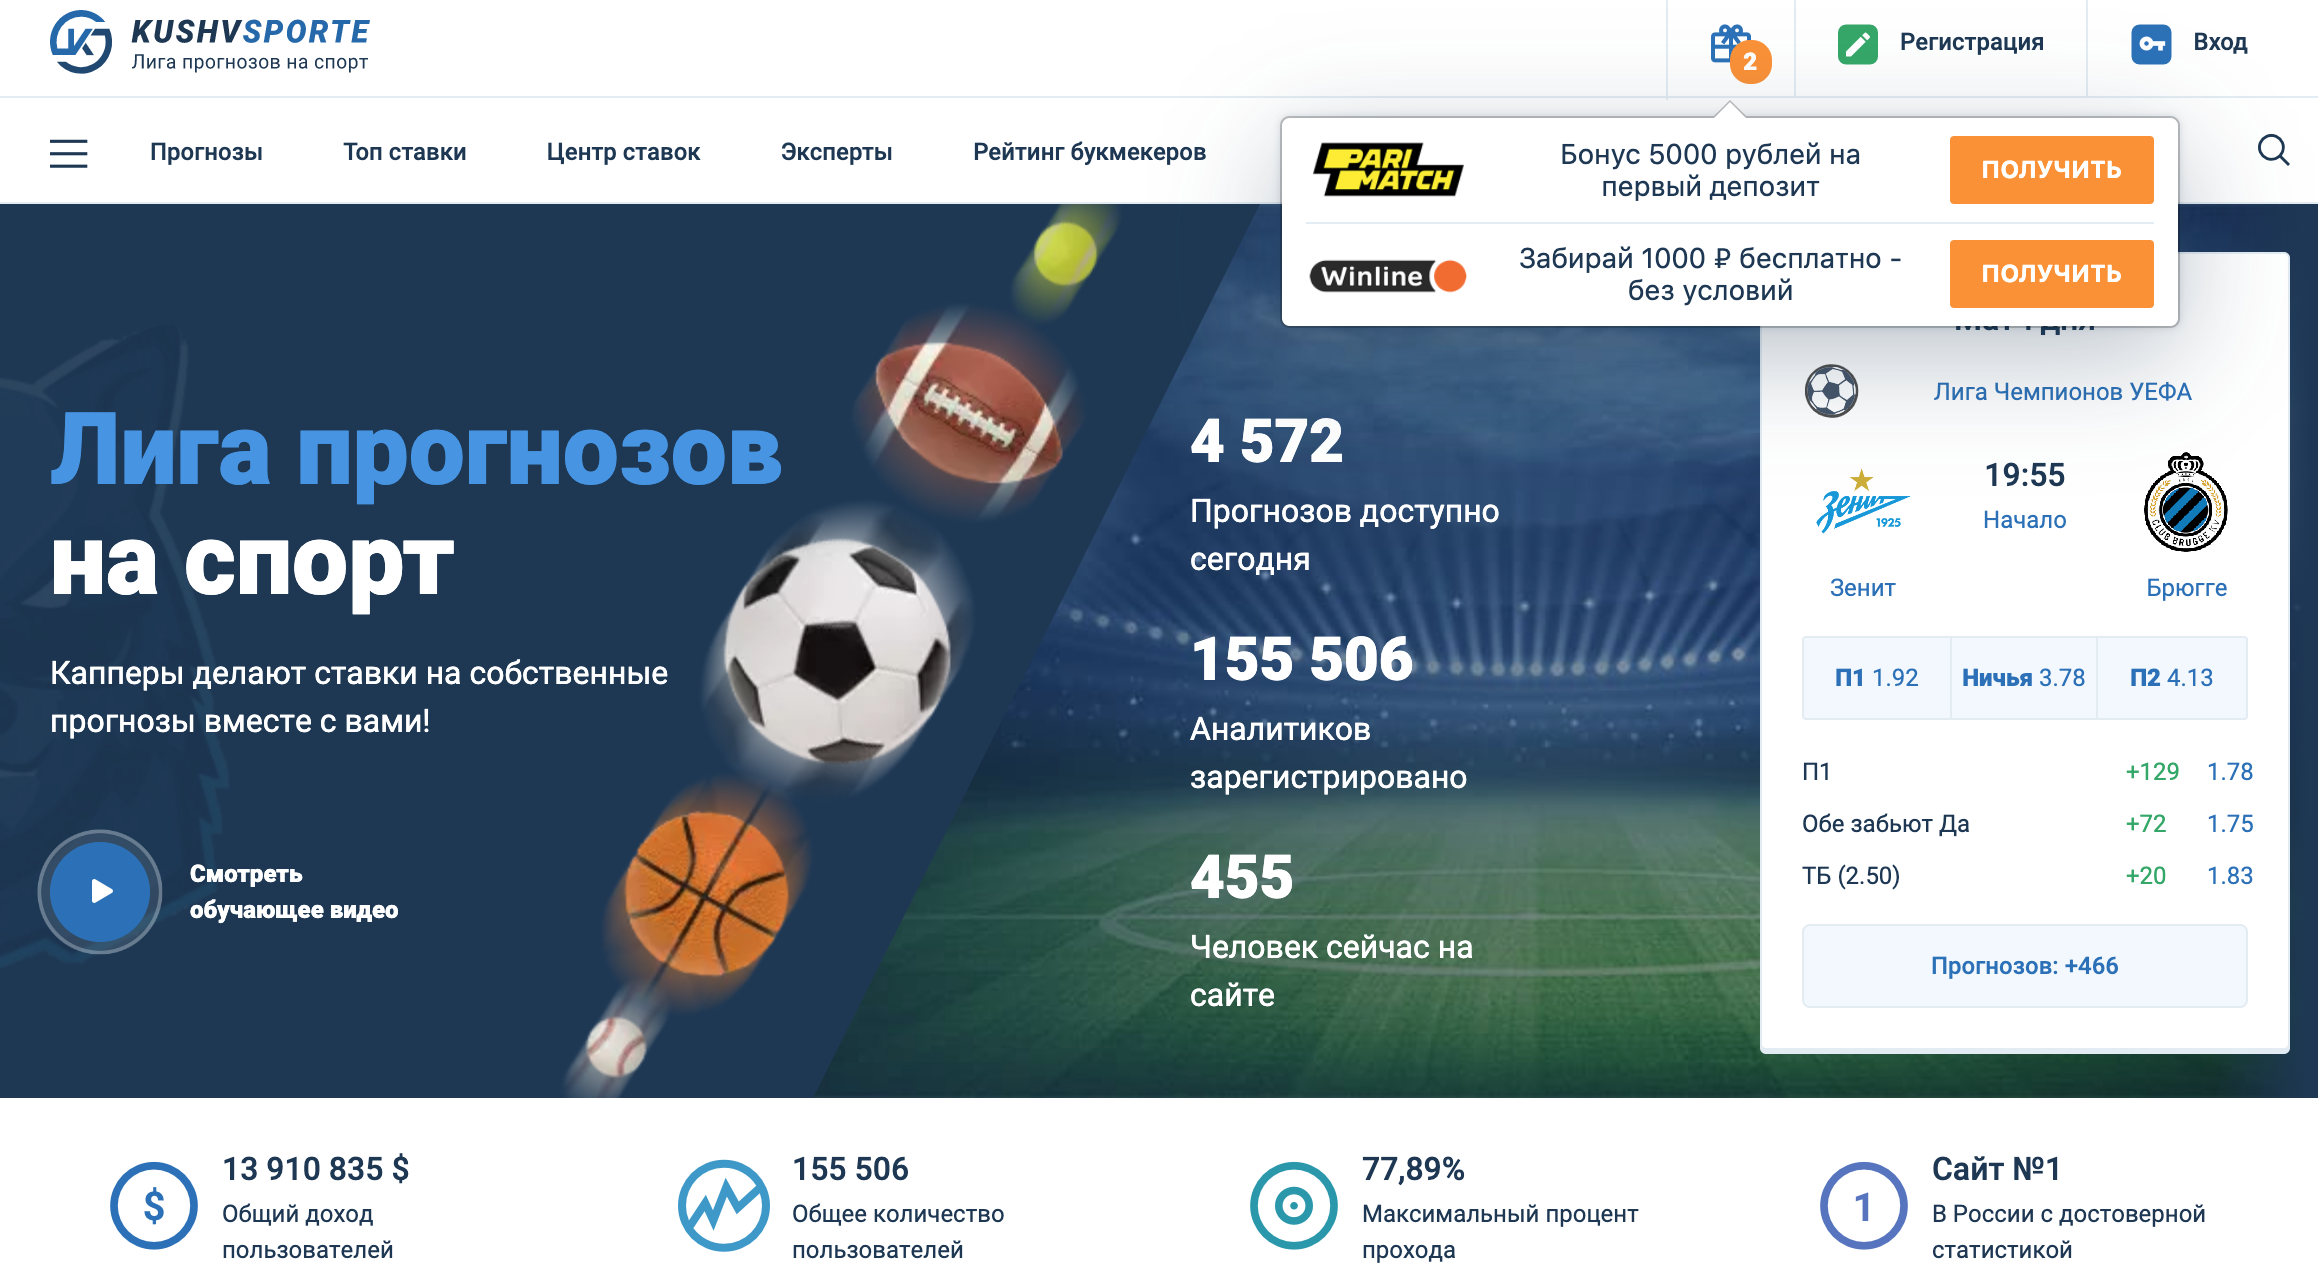 Главная страница сайта Kushvsporte ru (Кушвспорте ру)